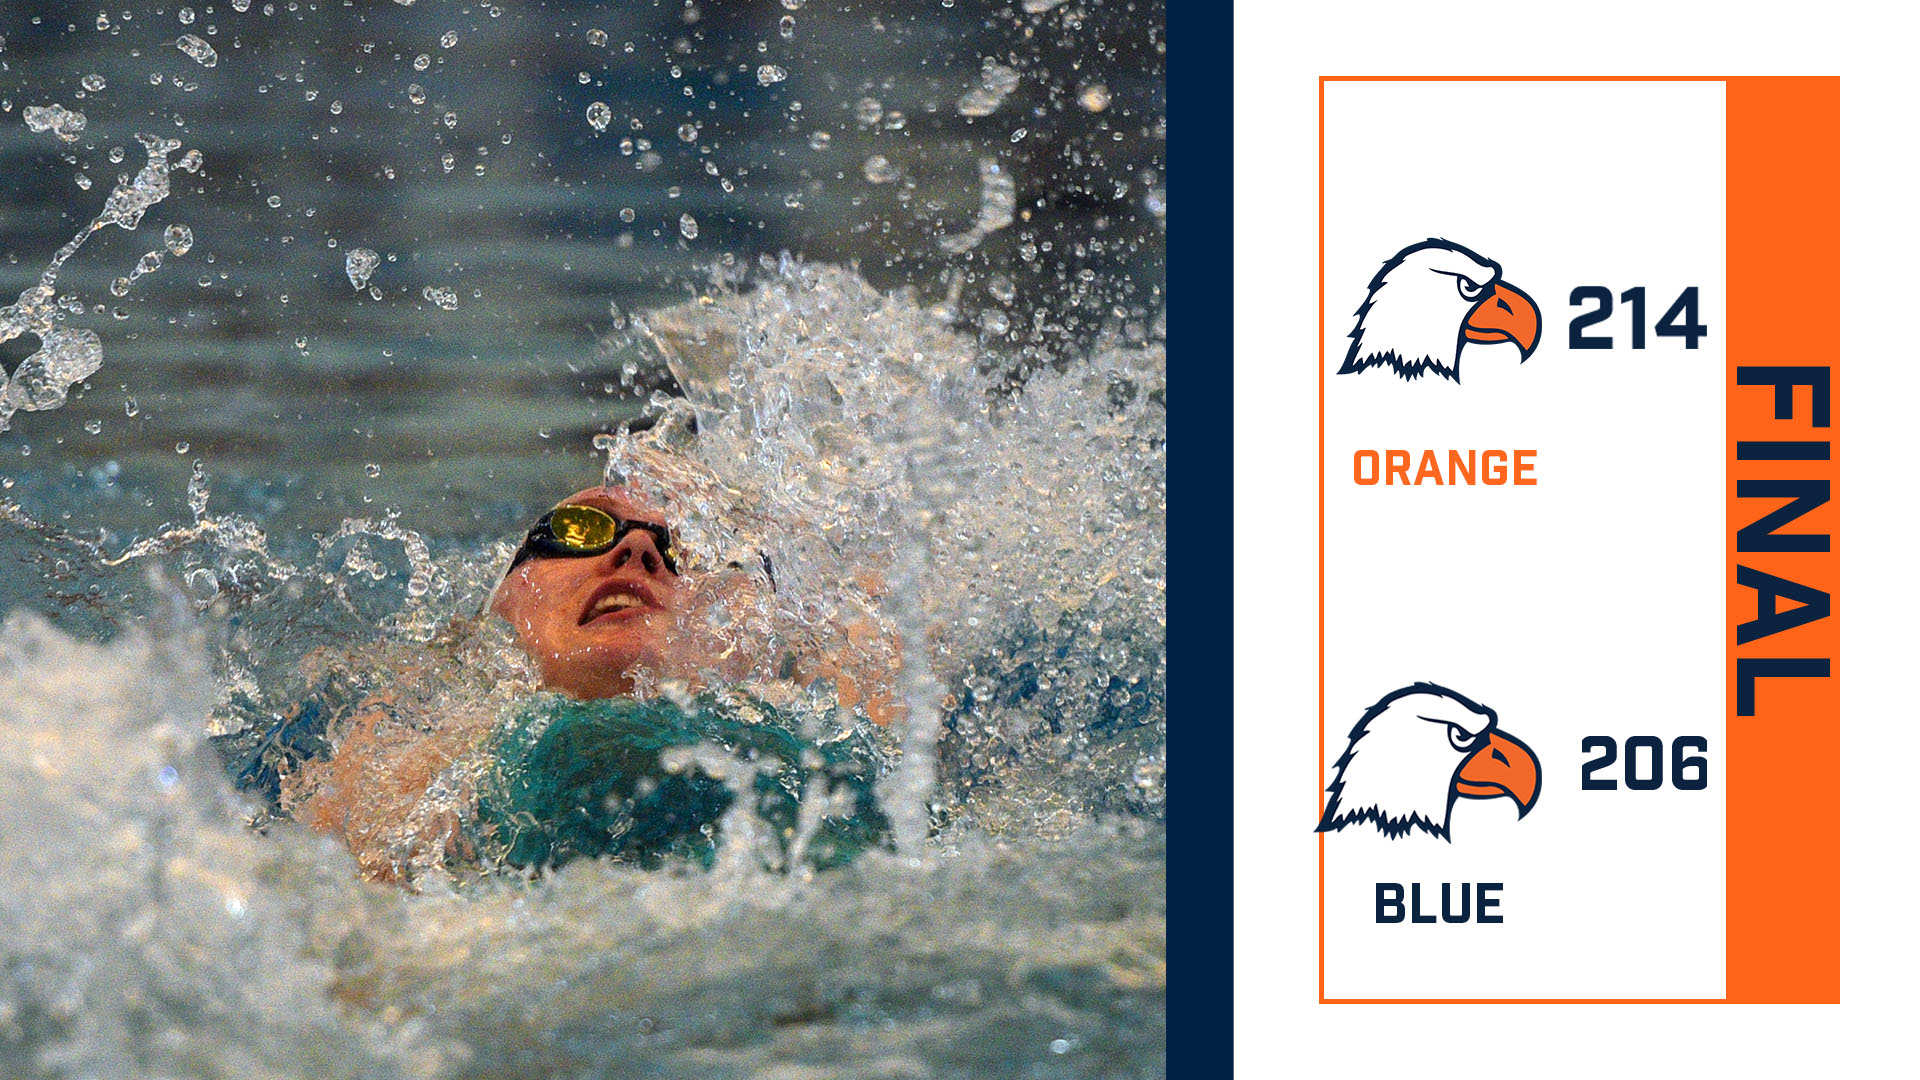 Orange holds 3-2 series advantage after 5th annual C-N Swimming Blue v Orange